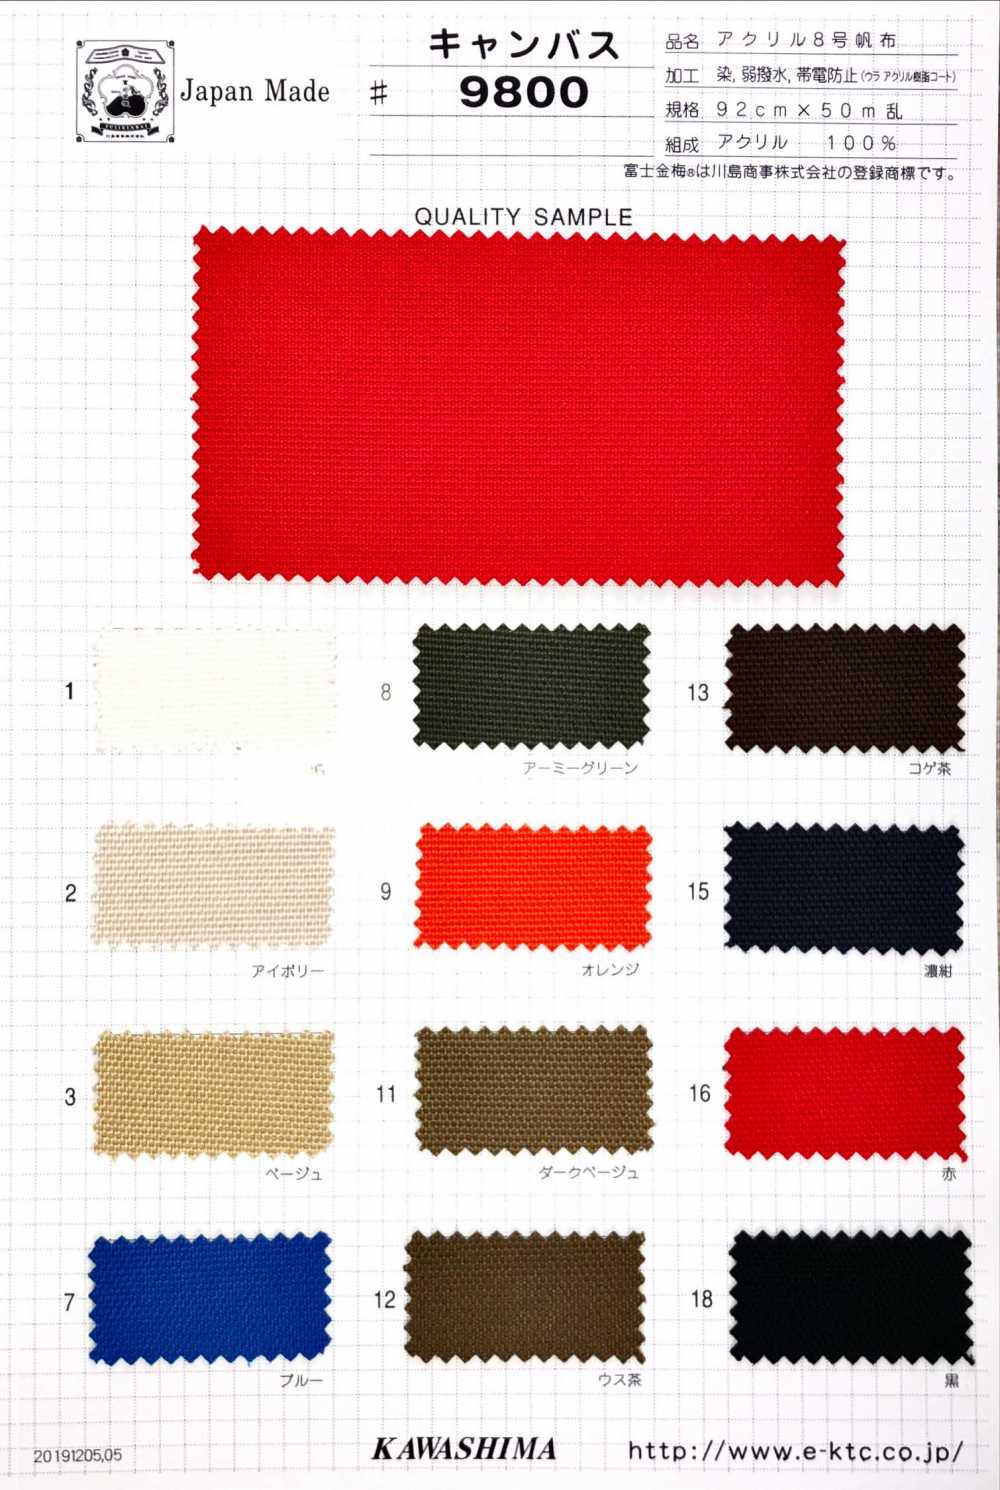 9800 Fuji Kinume Acrylic Canvas No. 8 Weak Water Repellency, Antistatic, Back Acrylic Coat[Fabrica Textil] Ciruela Dorada Fuji